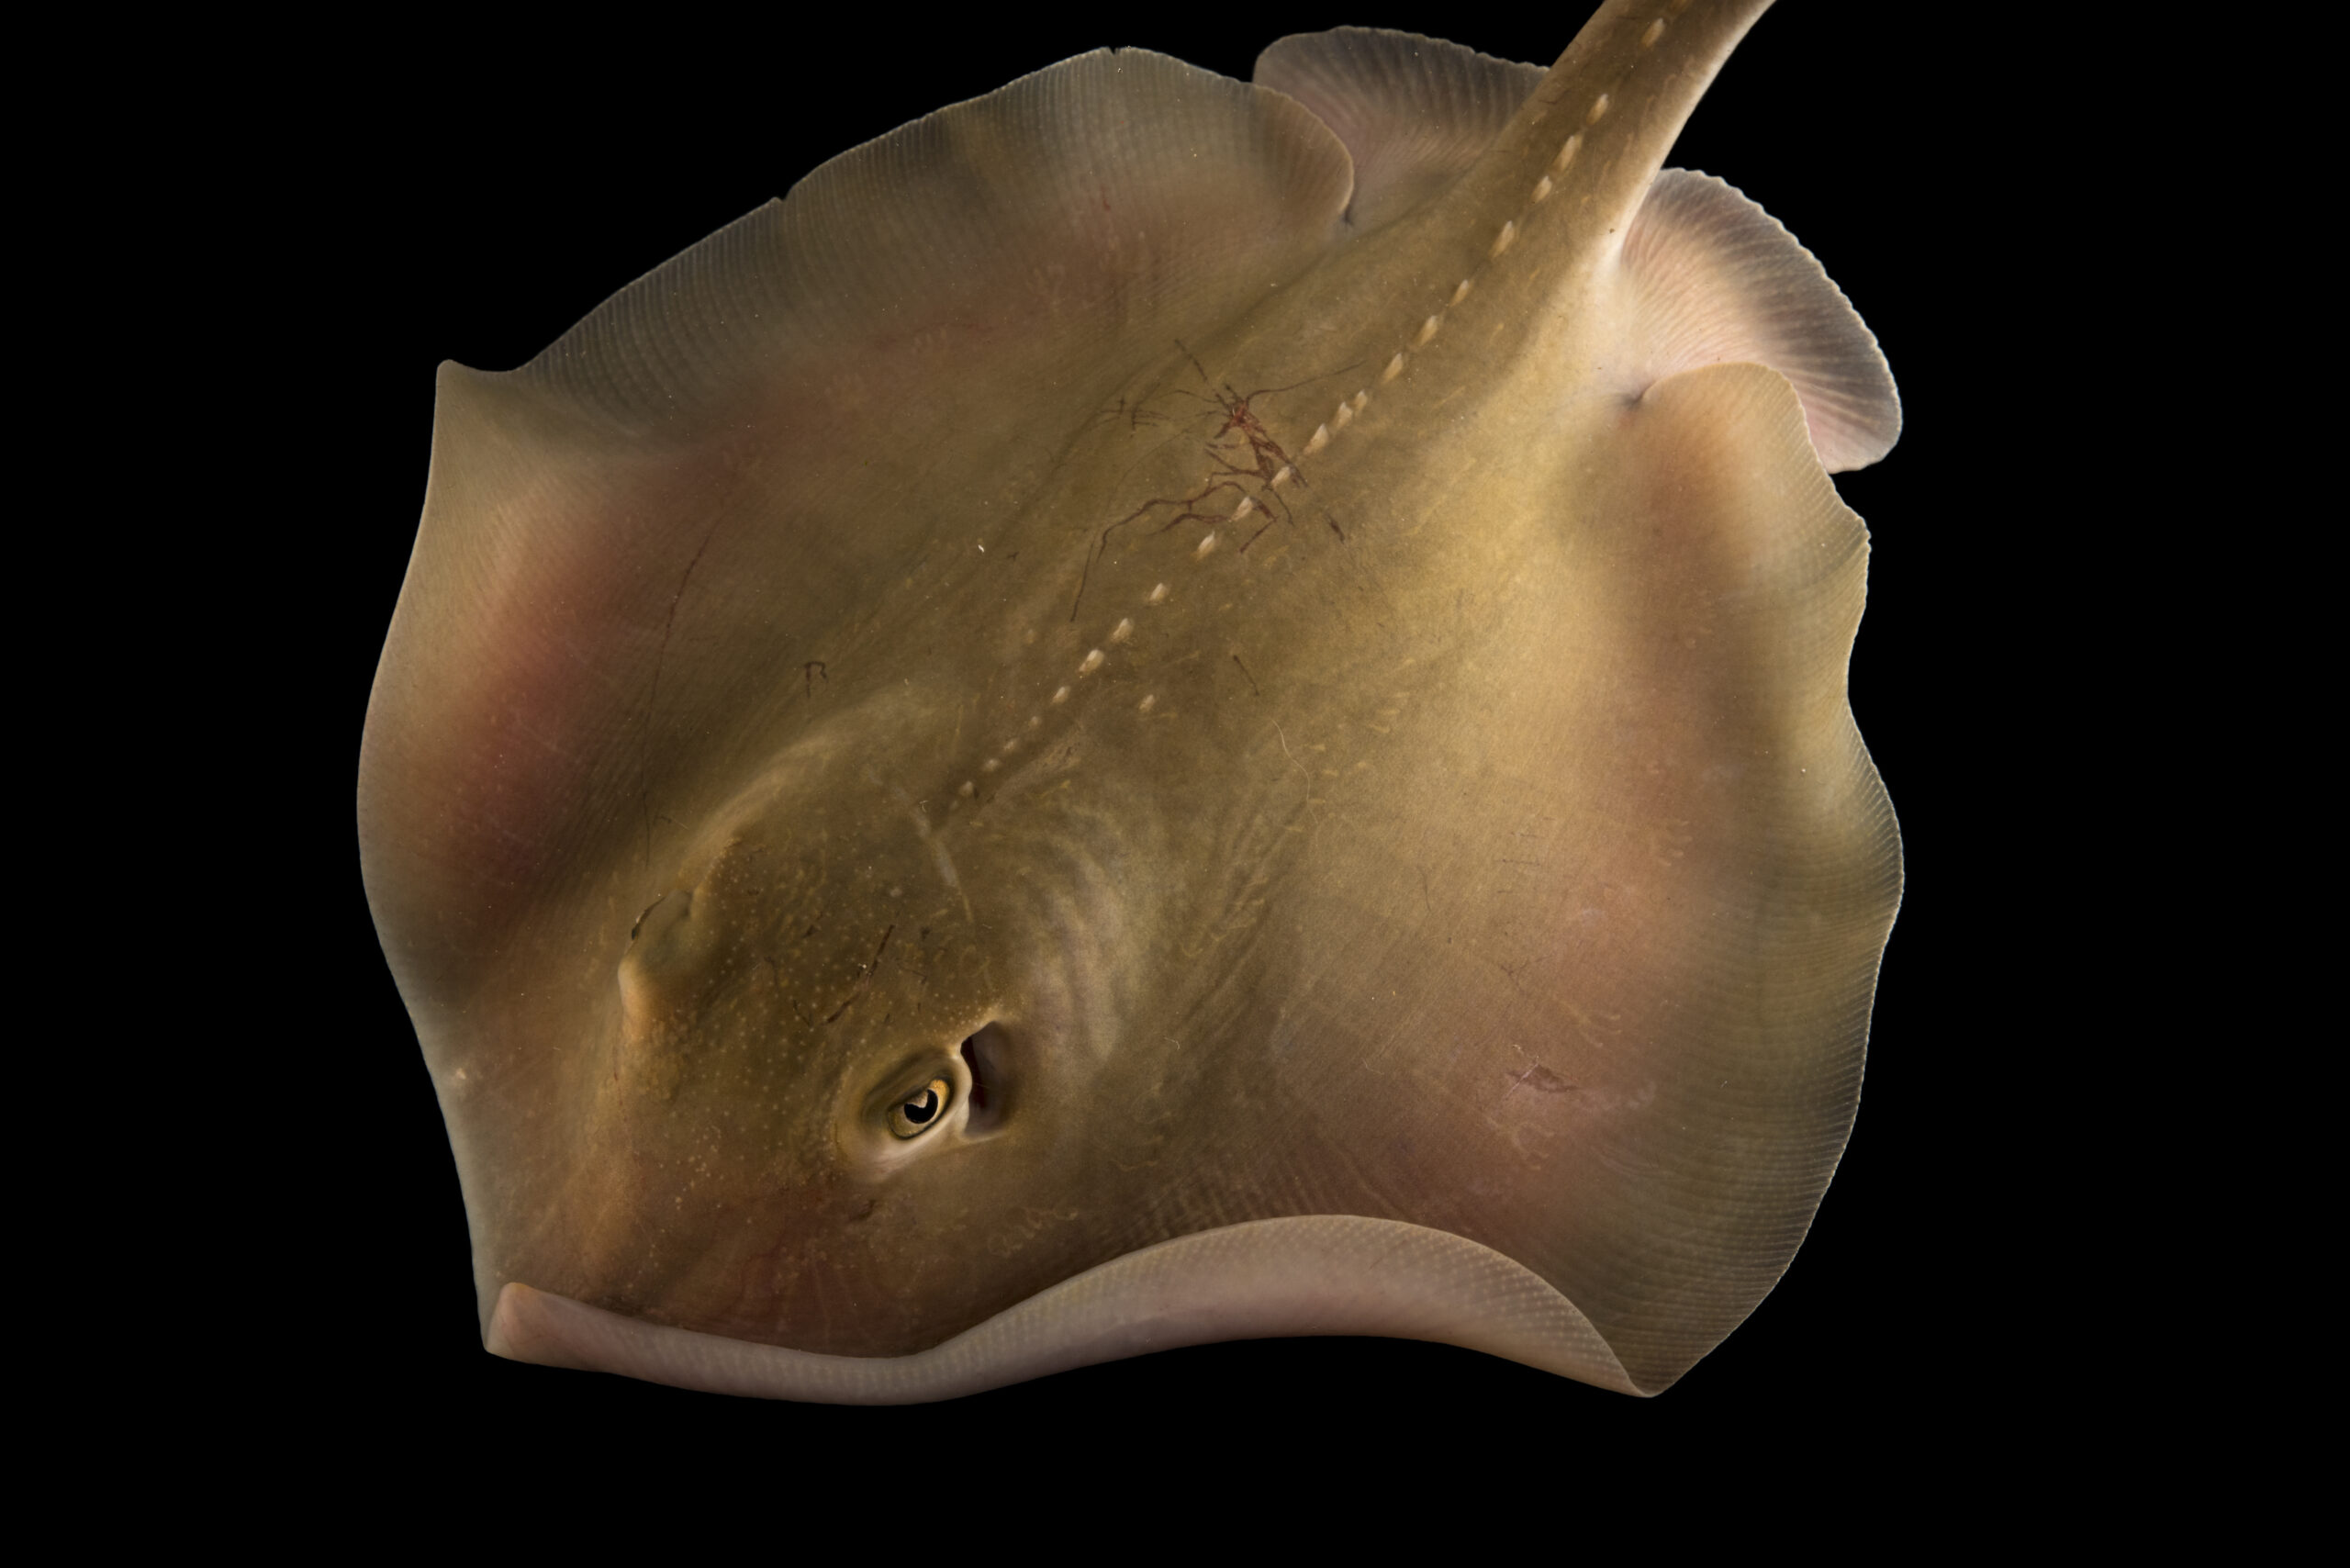 Atlantic sting ray (Dasyatis sabina)